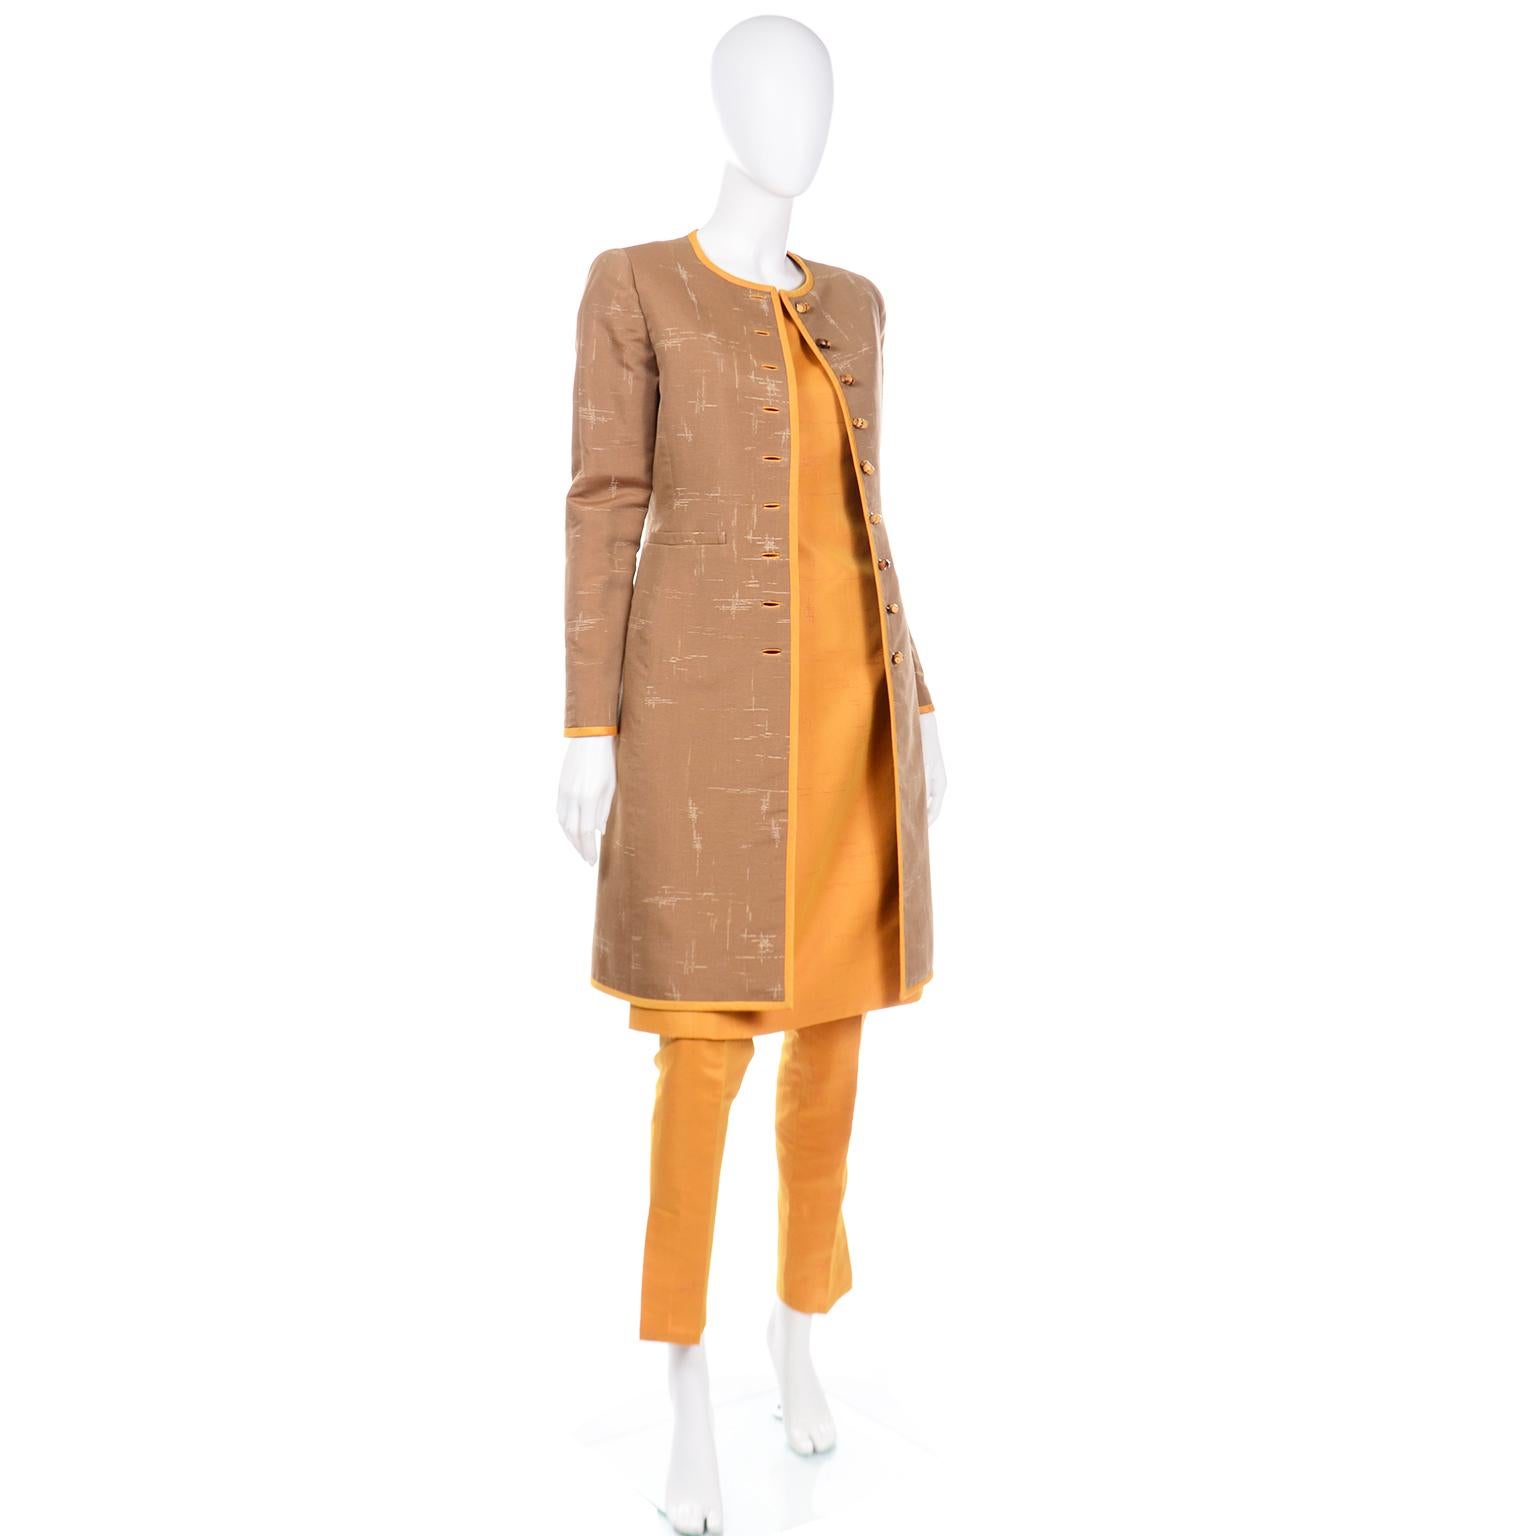 Oscar de la Renta 1990s Vintage 1960s inspired Coat Pants and Dress Outfit For Sale 1